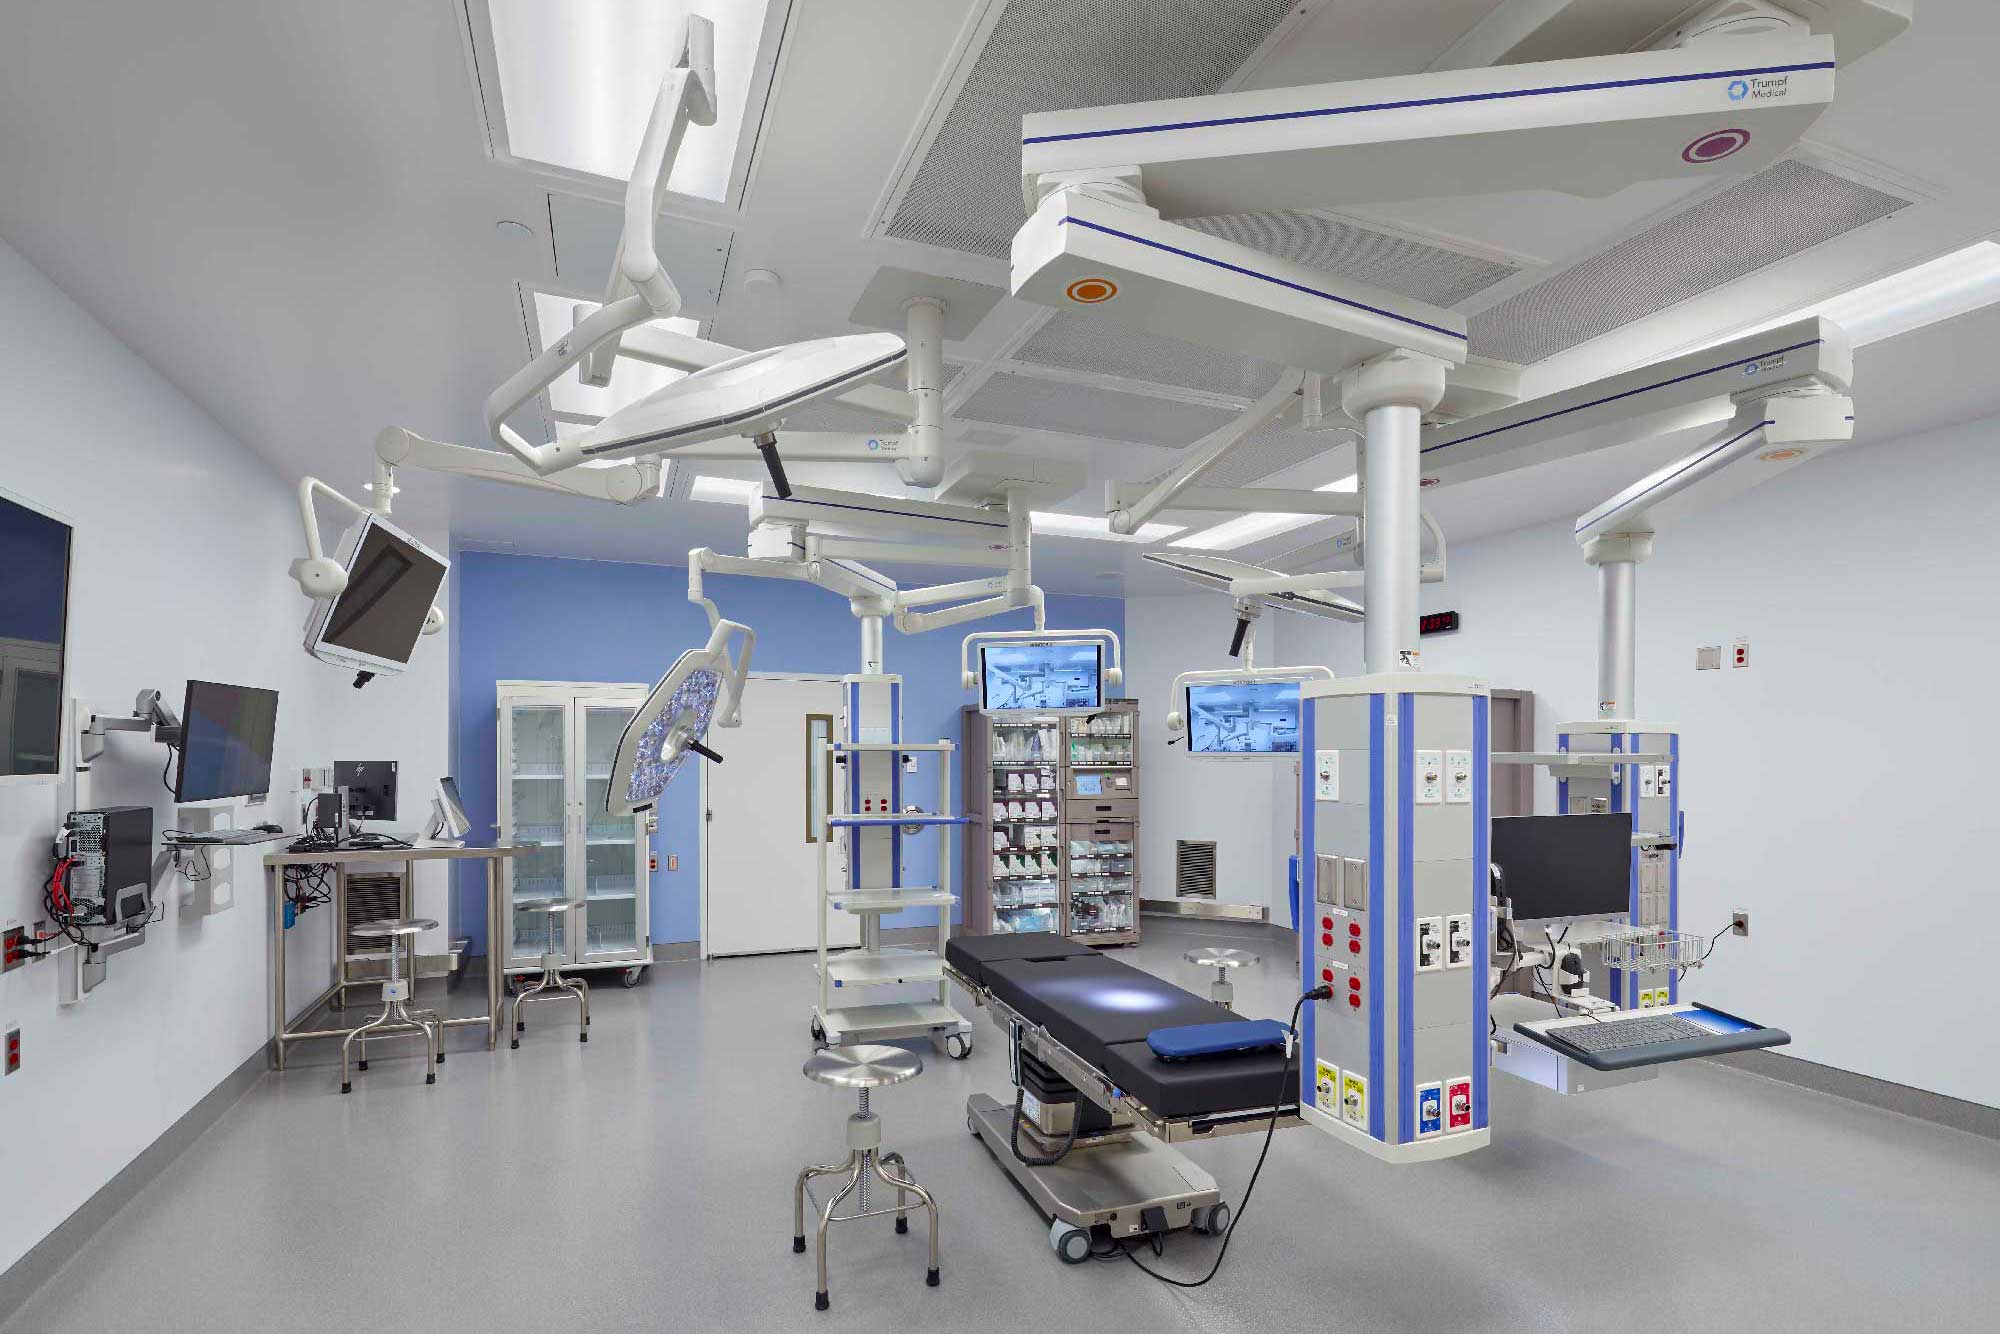 "Modern design floor - MOUNT SINAI HOSPITAL "